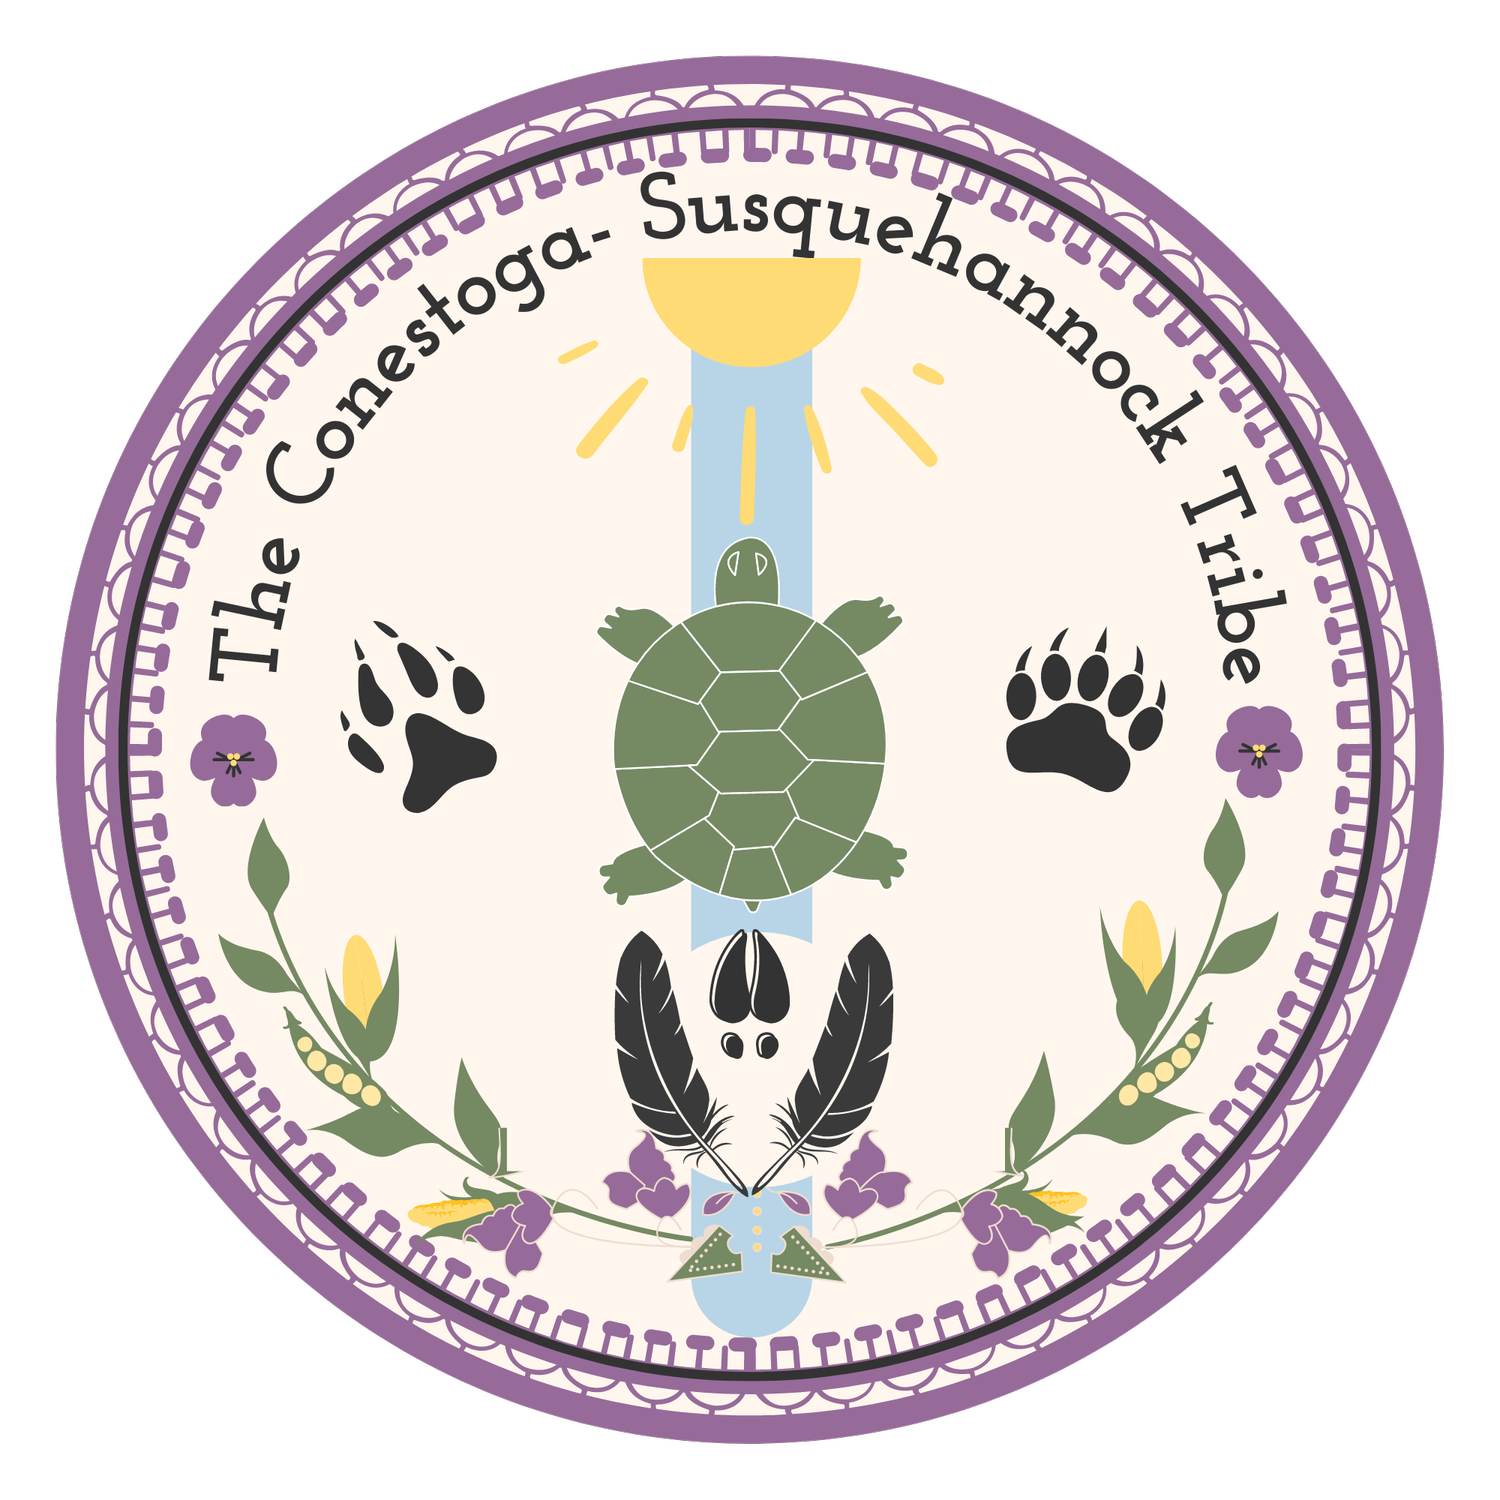 The Conestoga-Susquehannock Tribe